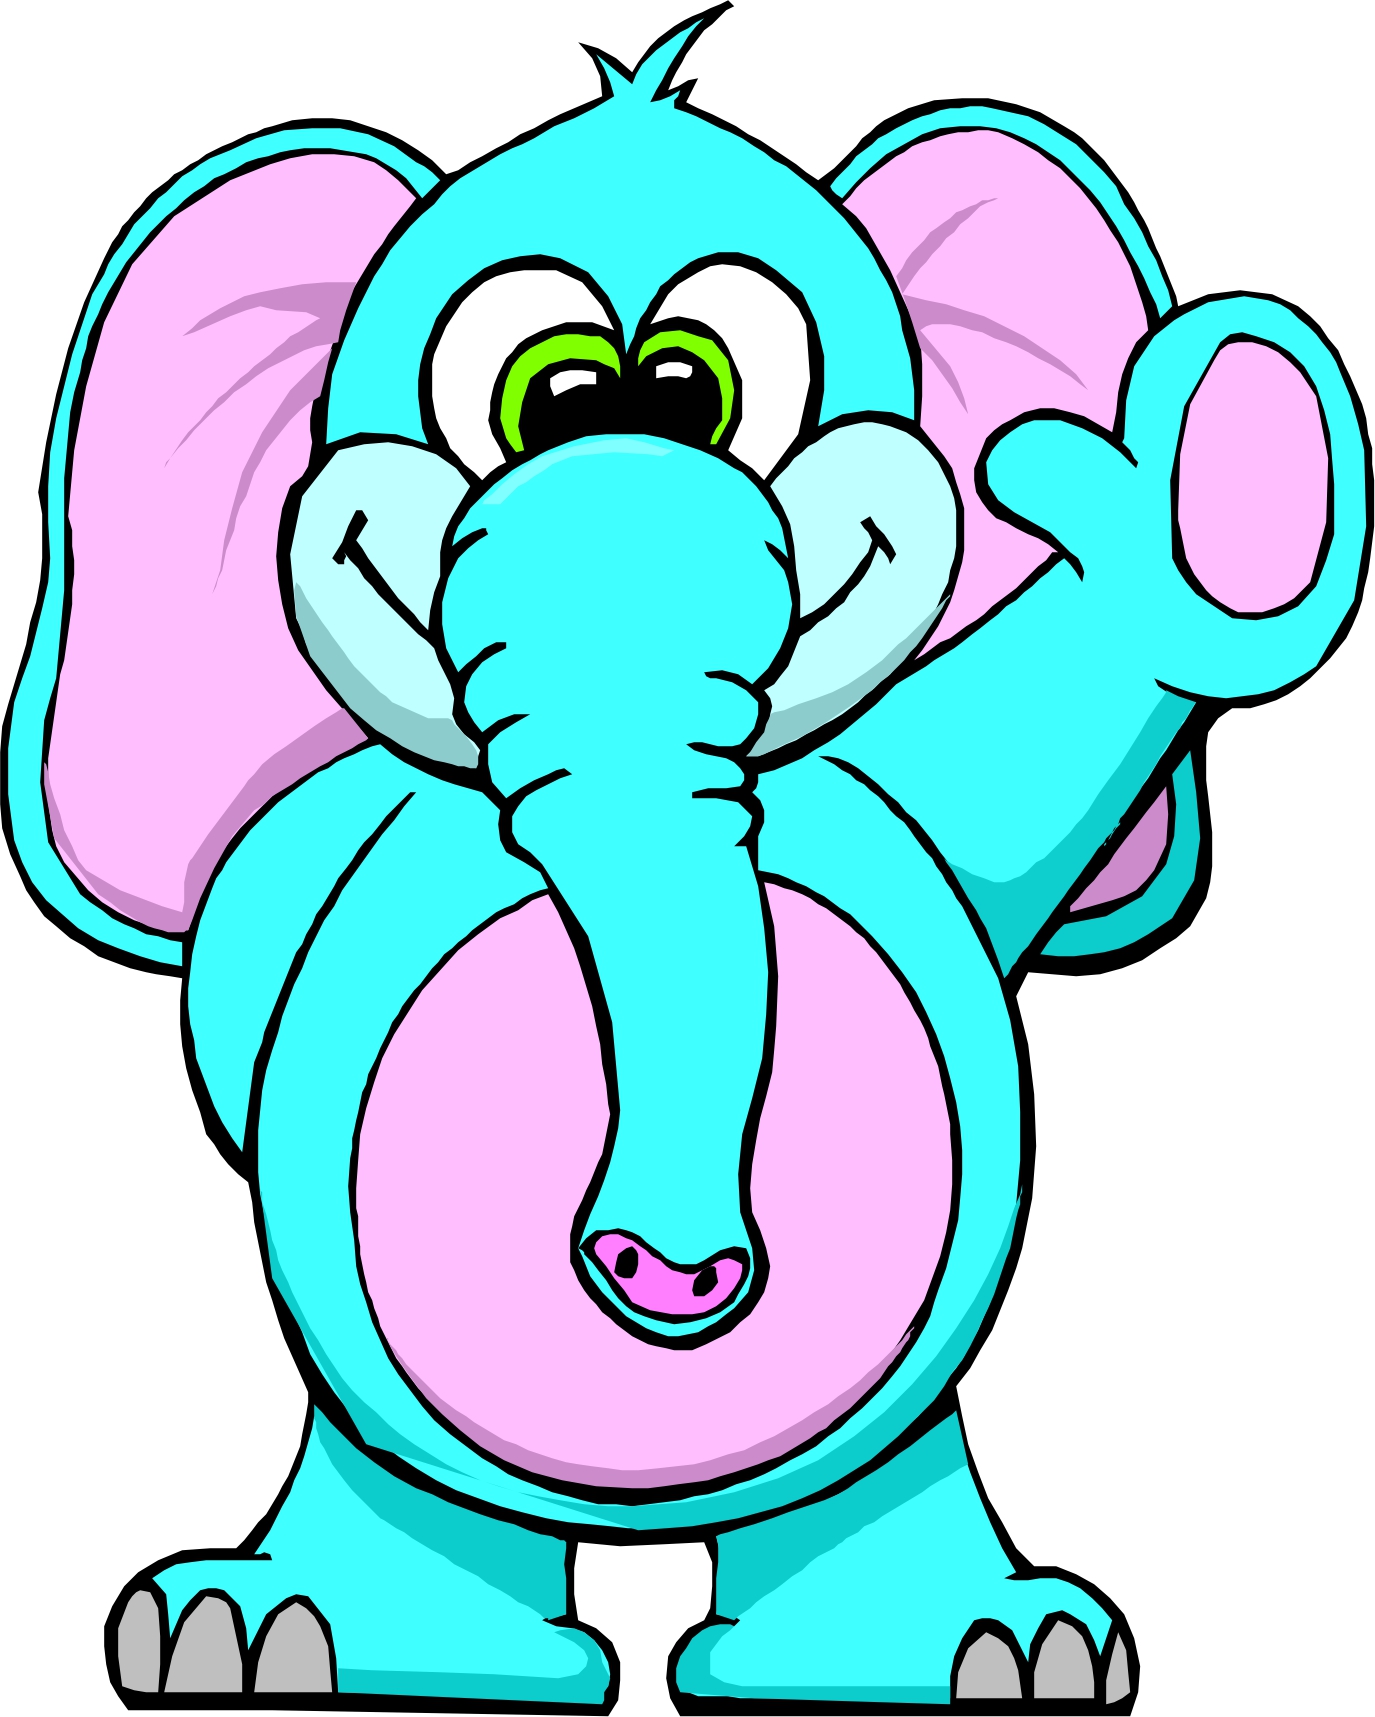 Funny-Elephant-cartoon-10 - Animals Planent.